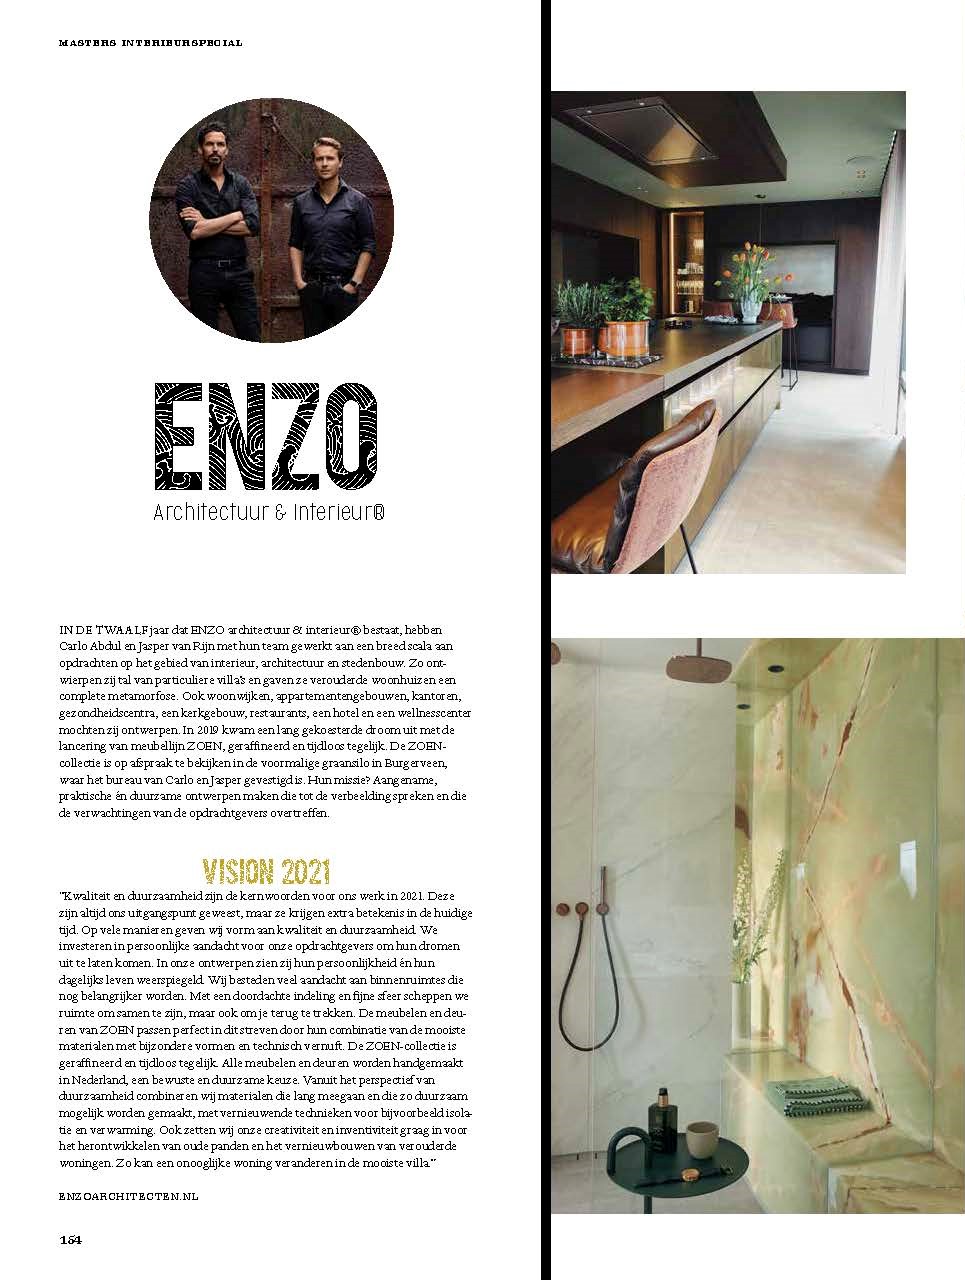 ENZO architectuur N interieur - Haarlemmermeer - Silo - Burgerveen - publicatie - MASTERS HQ - architectenspecial